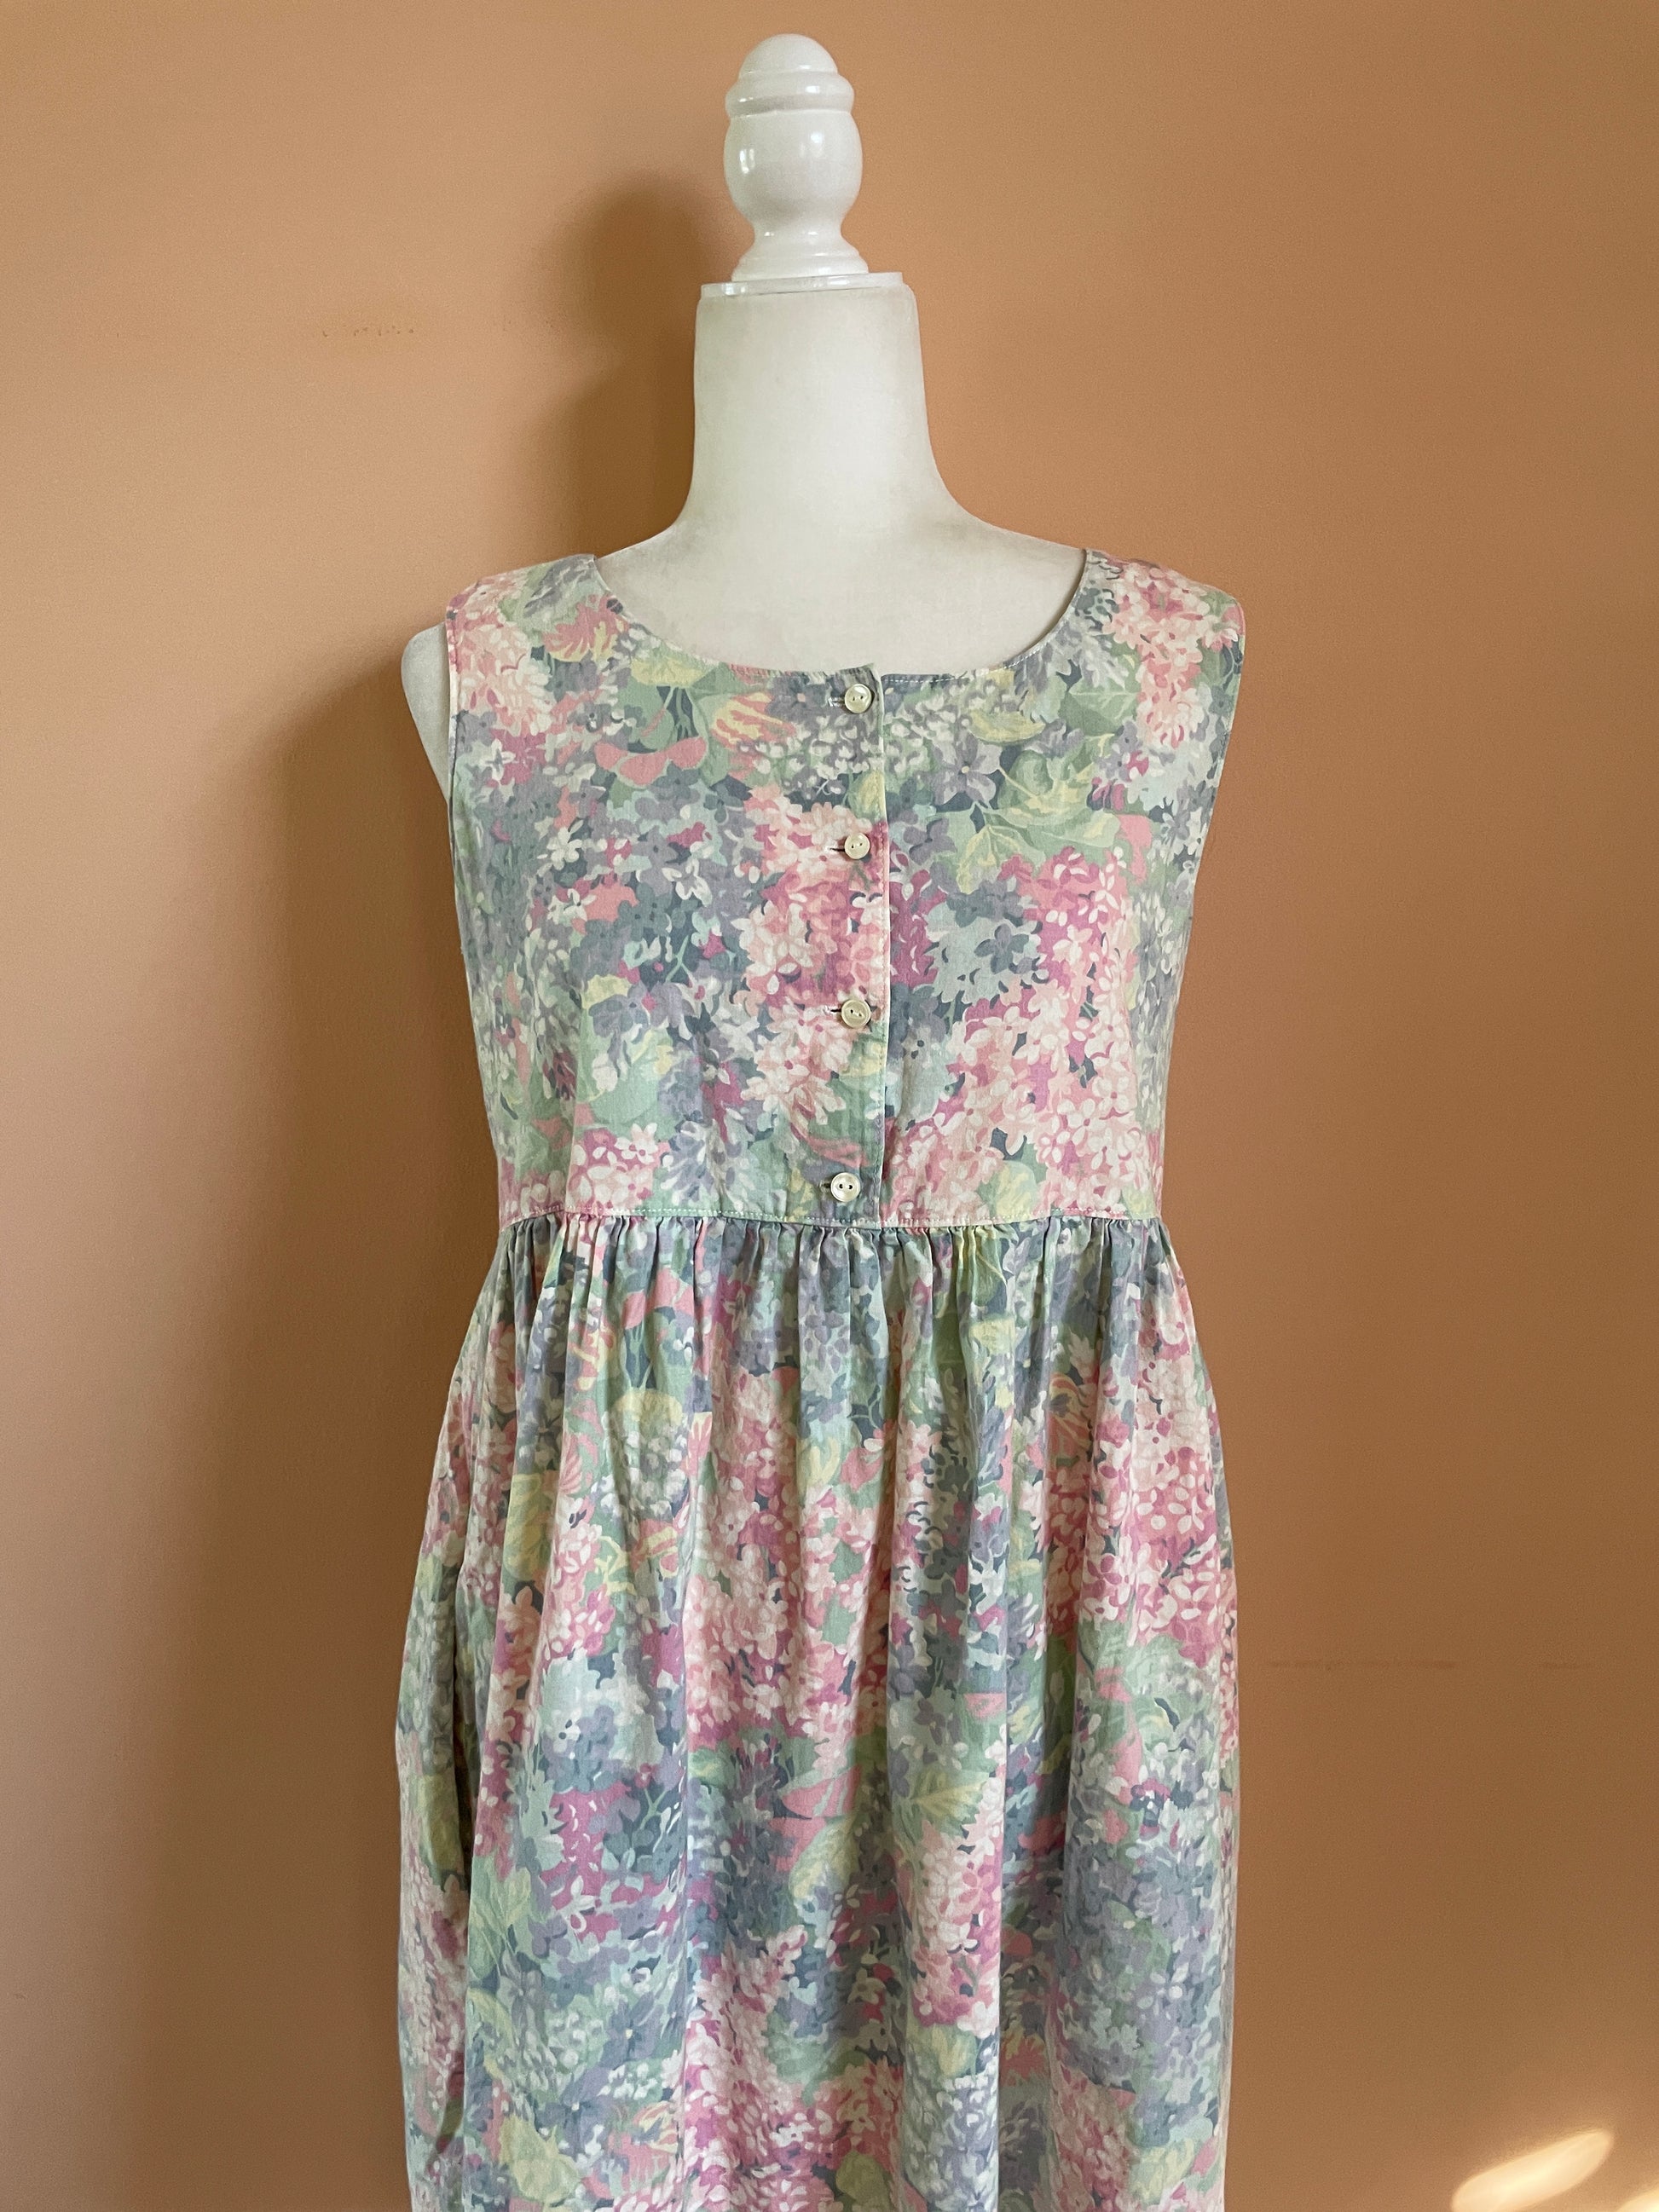  Sweet Cottage 80s Pastel Floral Print Sleeveless Cotton Summer Dress S/M